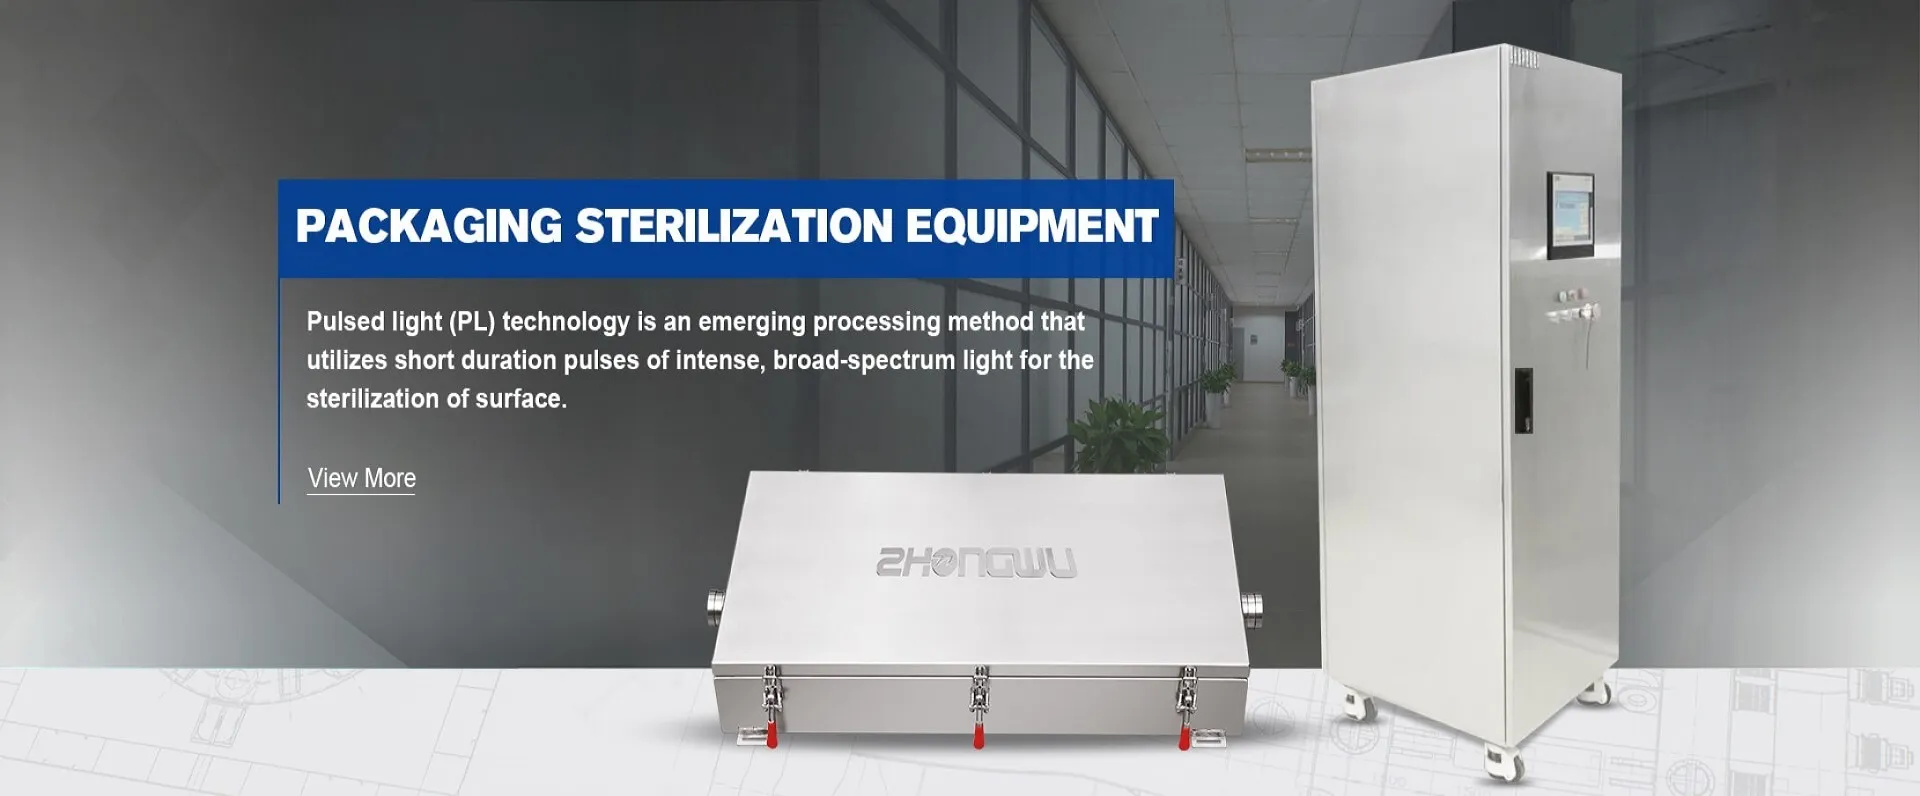 Packaging Sterilization Equipment